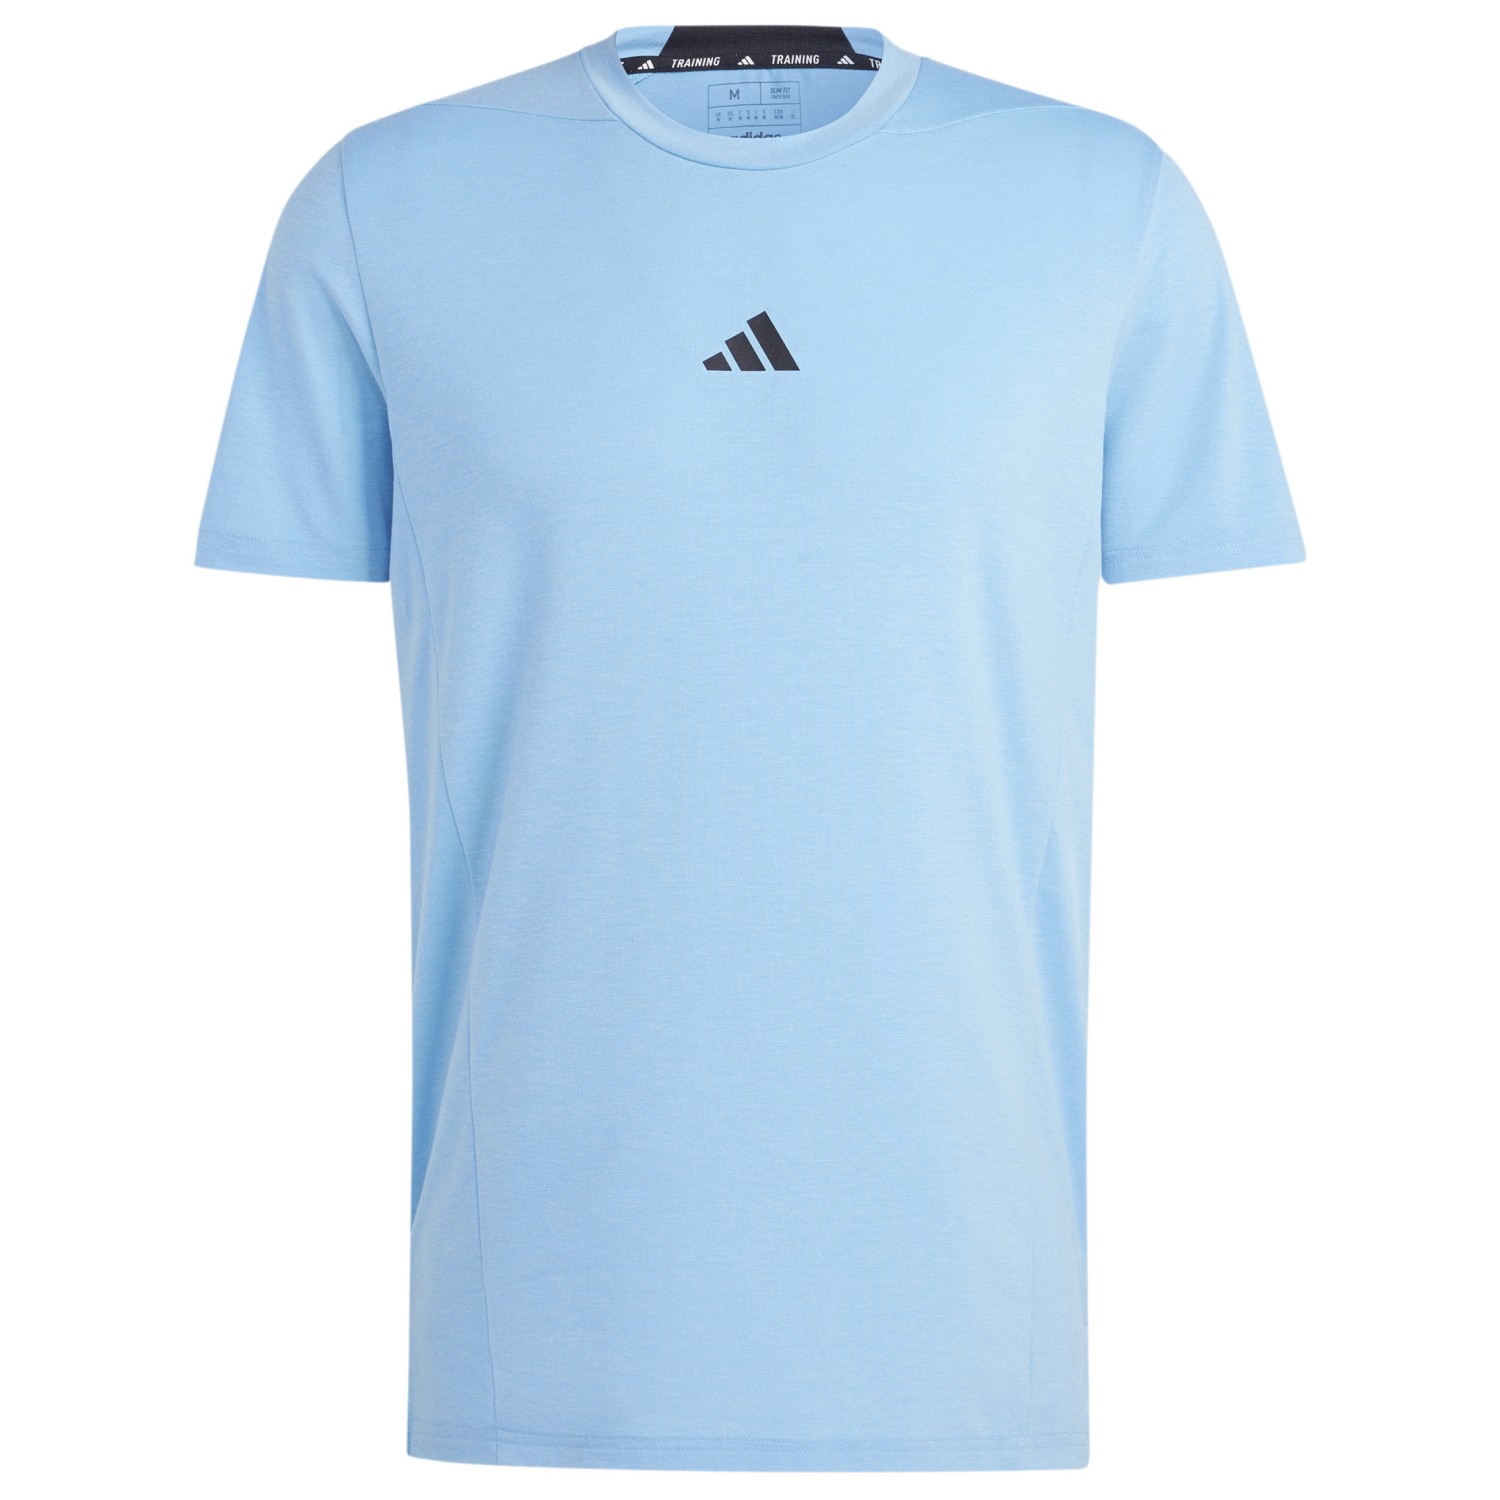 Функциональная рубашка Adidas Dessigned 4 Training Tee, цвет Semi Blue Burst